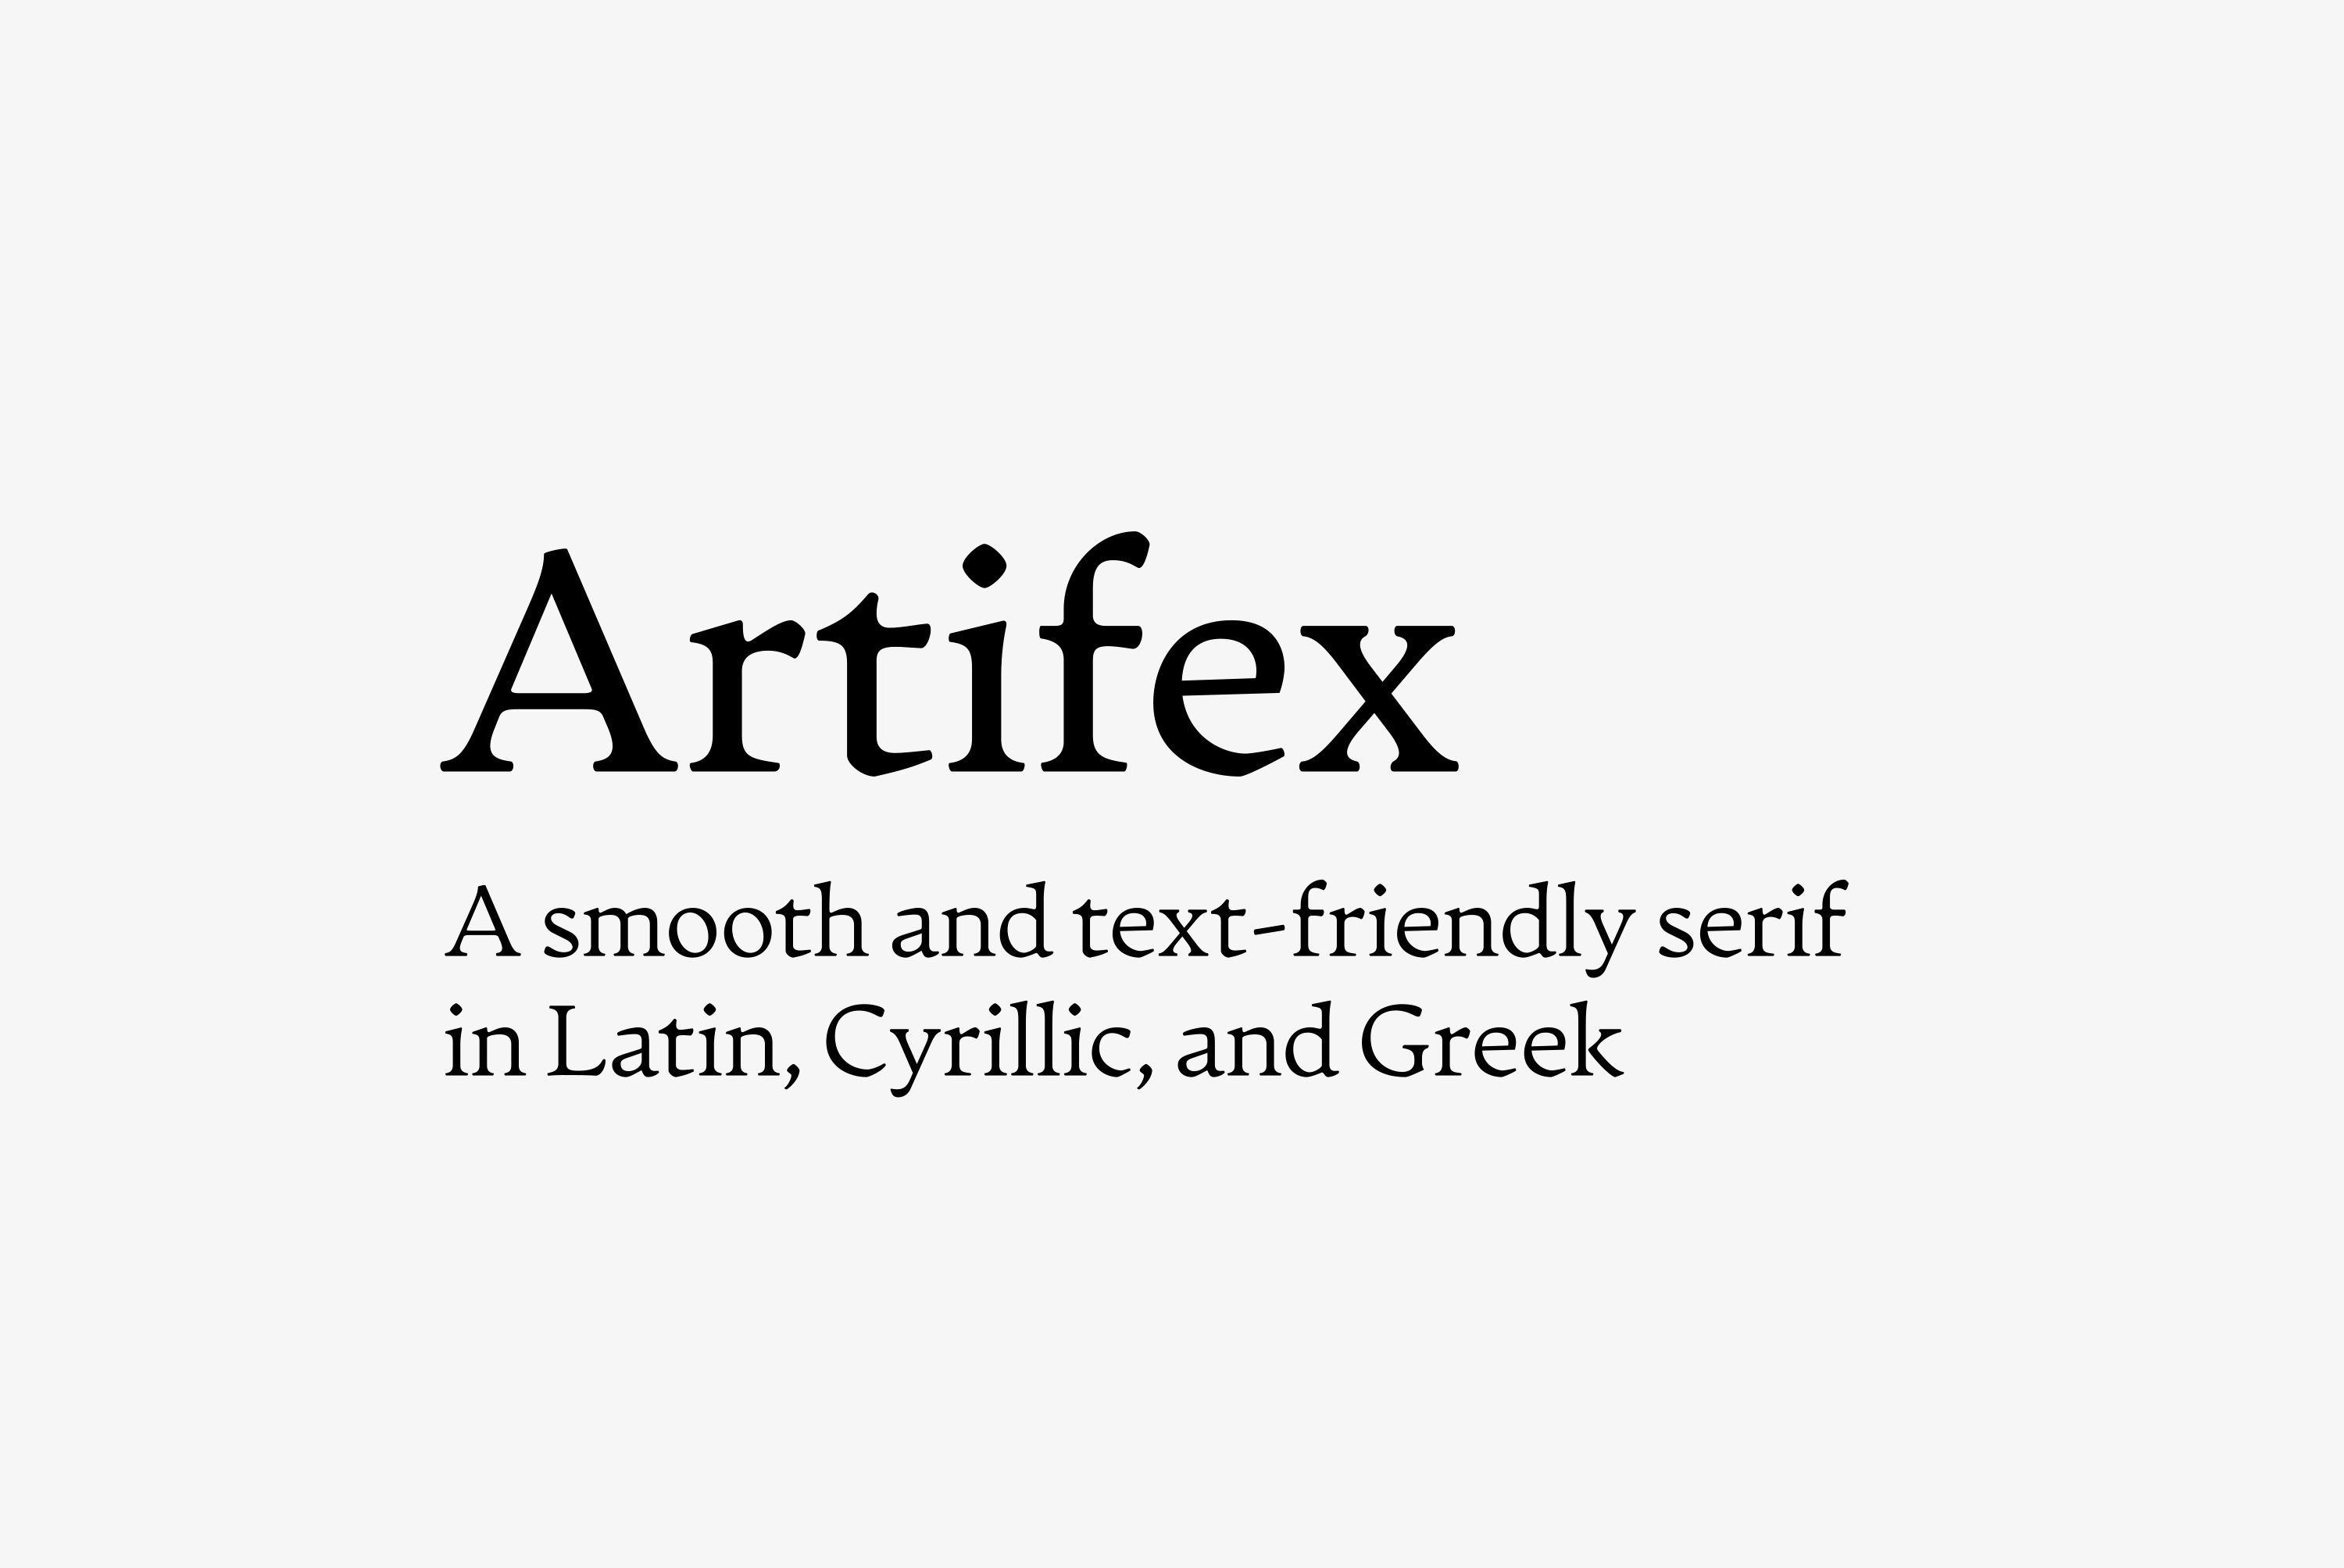 Artifex CF beautiful text serif font cover image.